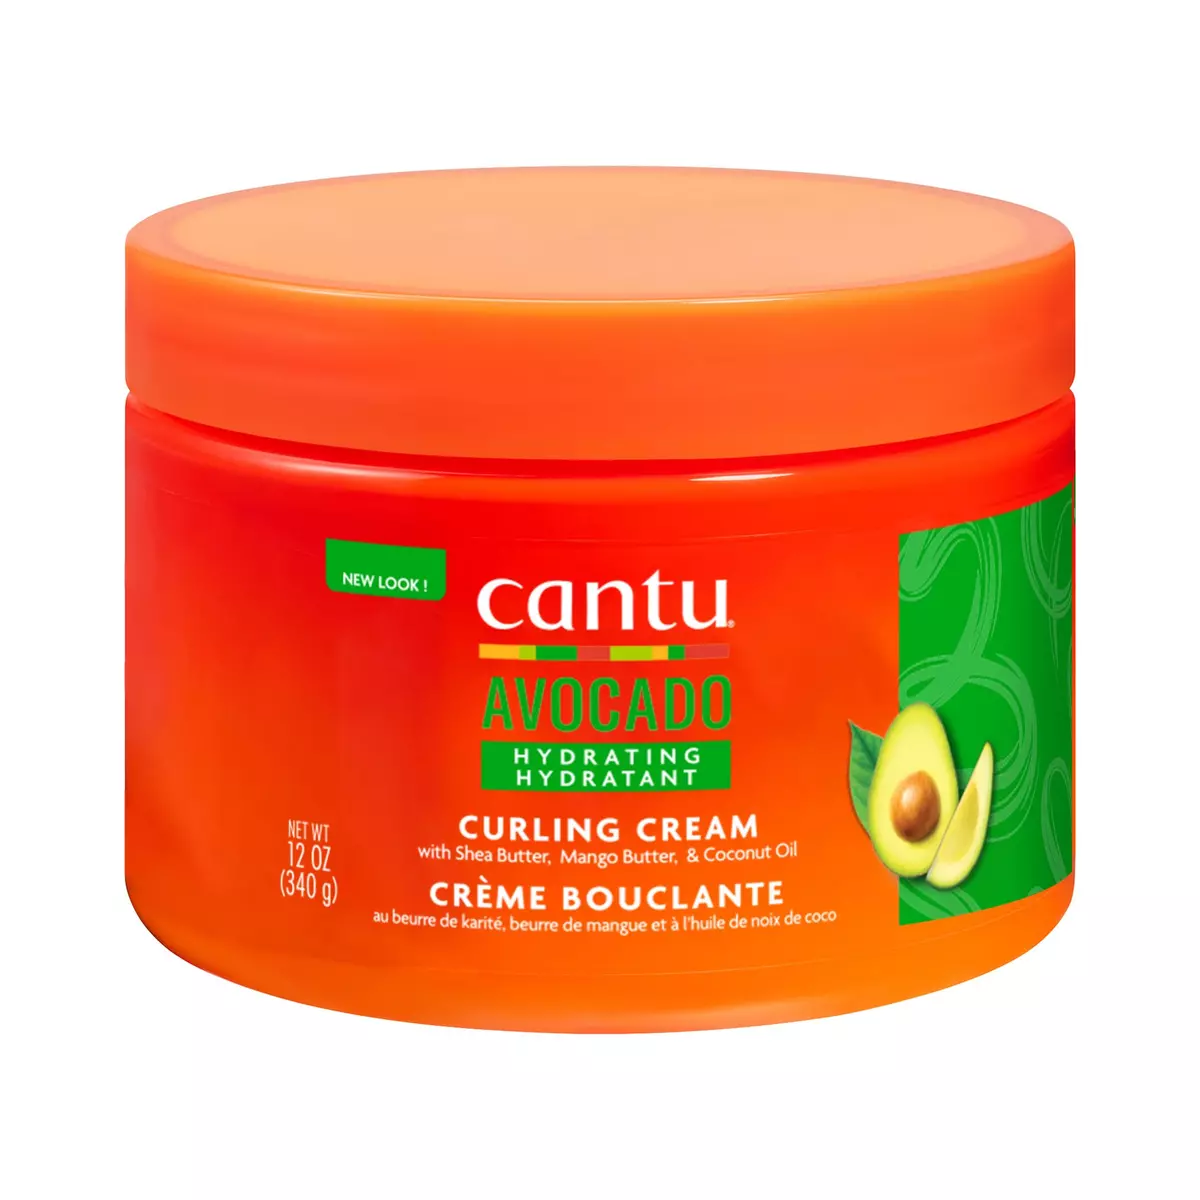 CANTU Crème bouclante hydratante avocat 340g